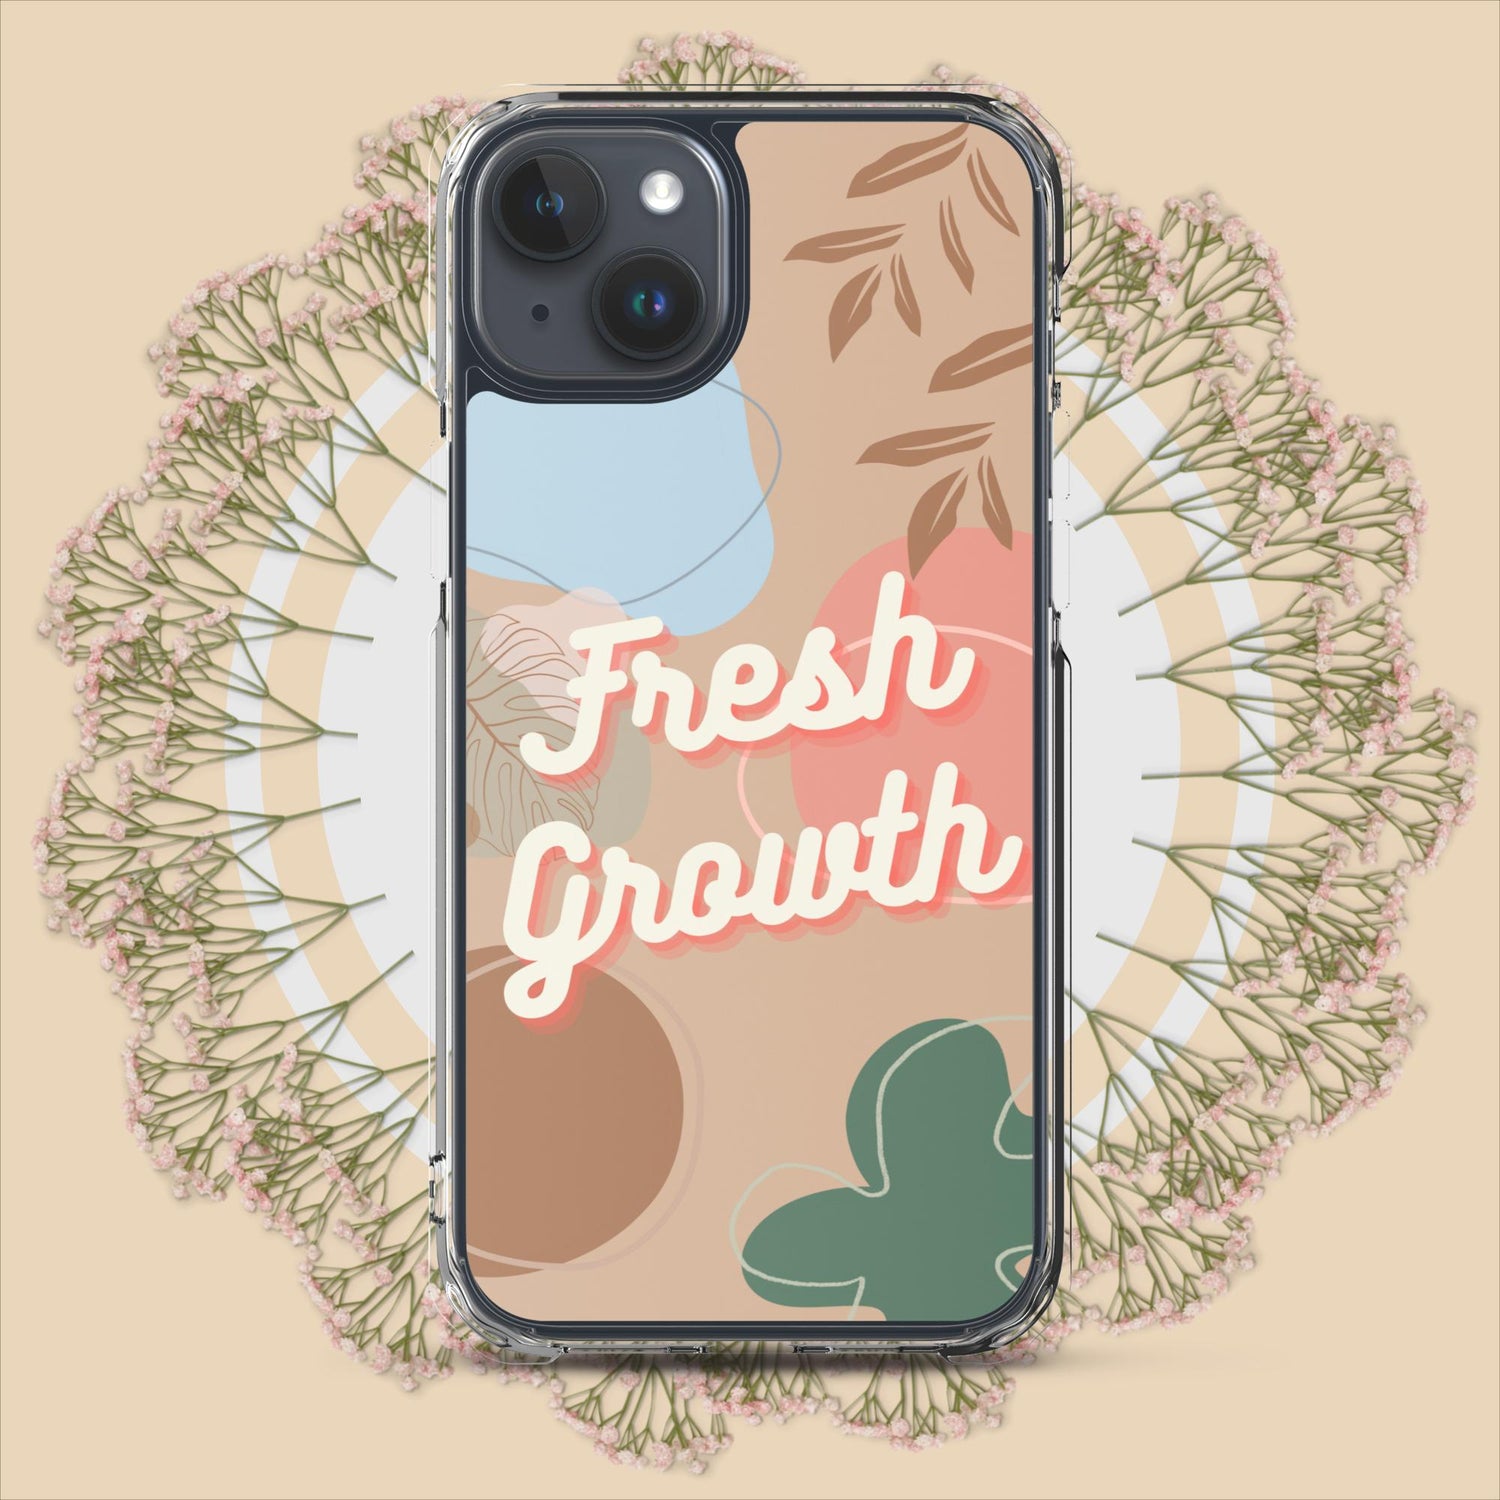 Fresh Growth - Iphone Case